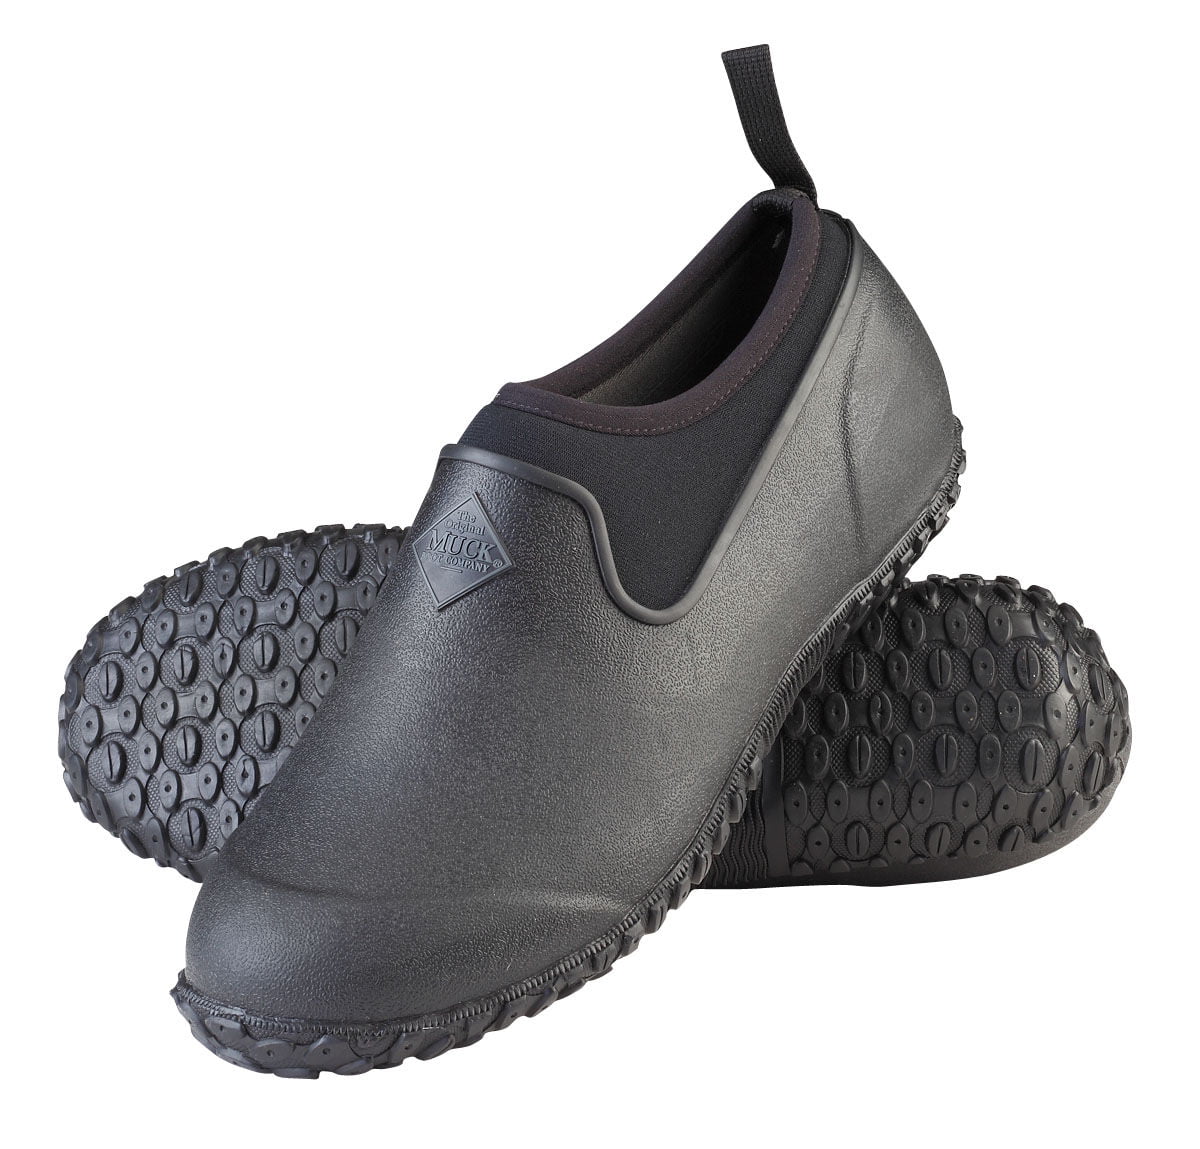 Muck Boot Company - Muck Muckster II Low Waterproof Shoe - Women's ...